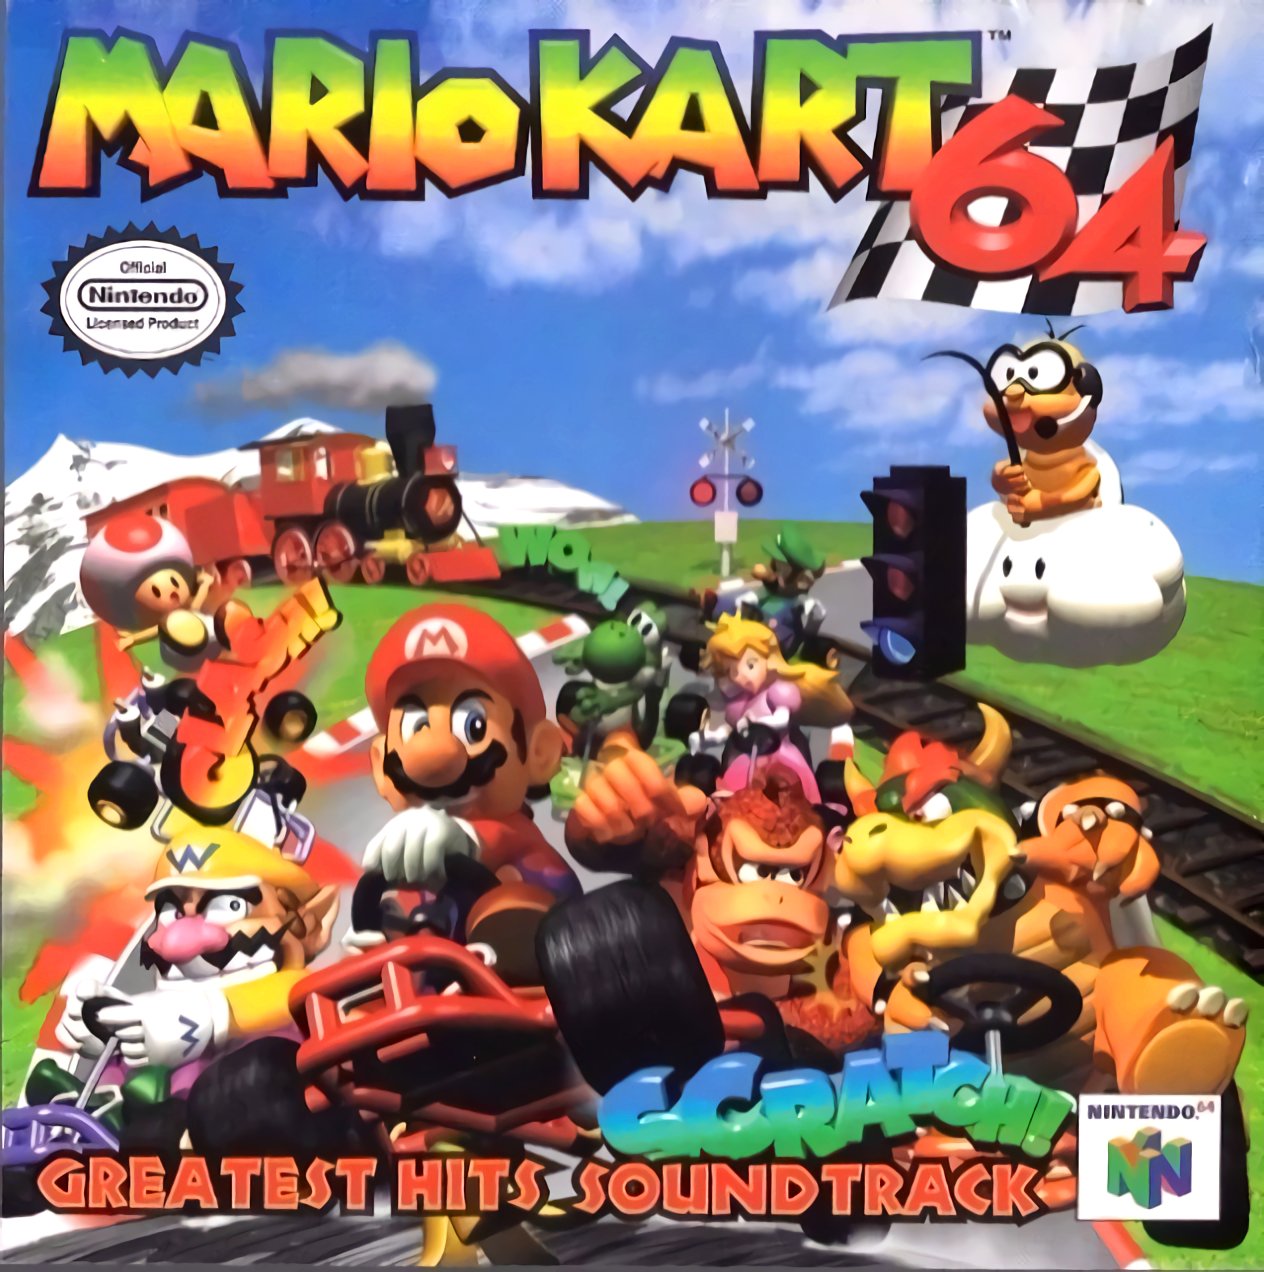 Mario Kart 64: Greatest Hits Soundtrack - Super Mario Wiki, the Mario